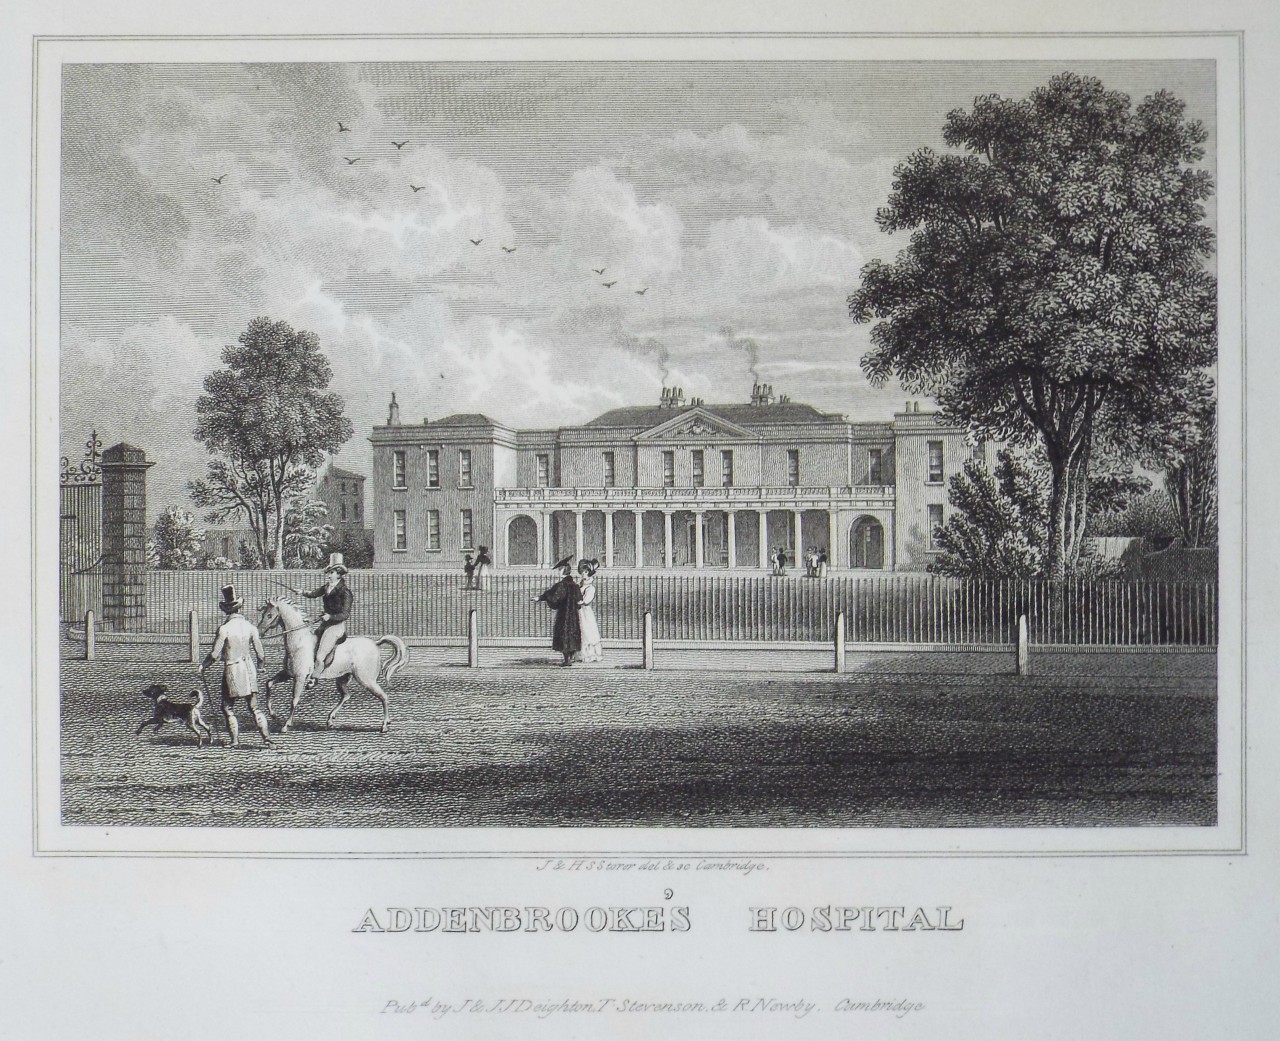 Print - Addenbrooke's Hospital. - Storer